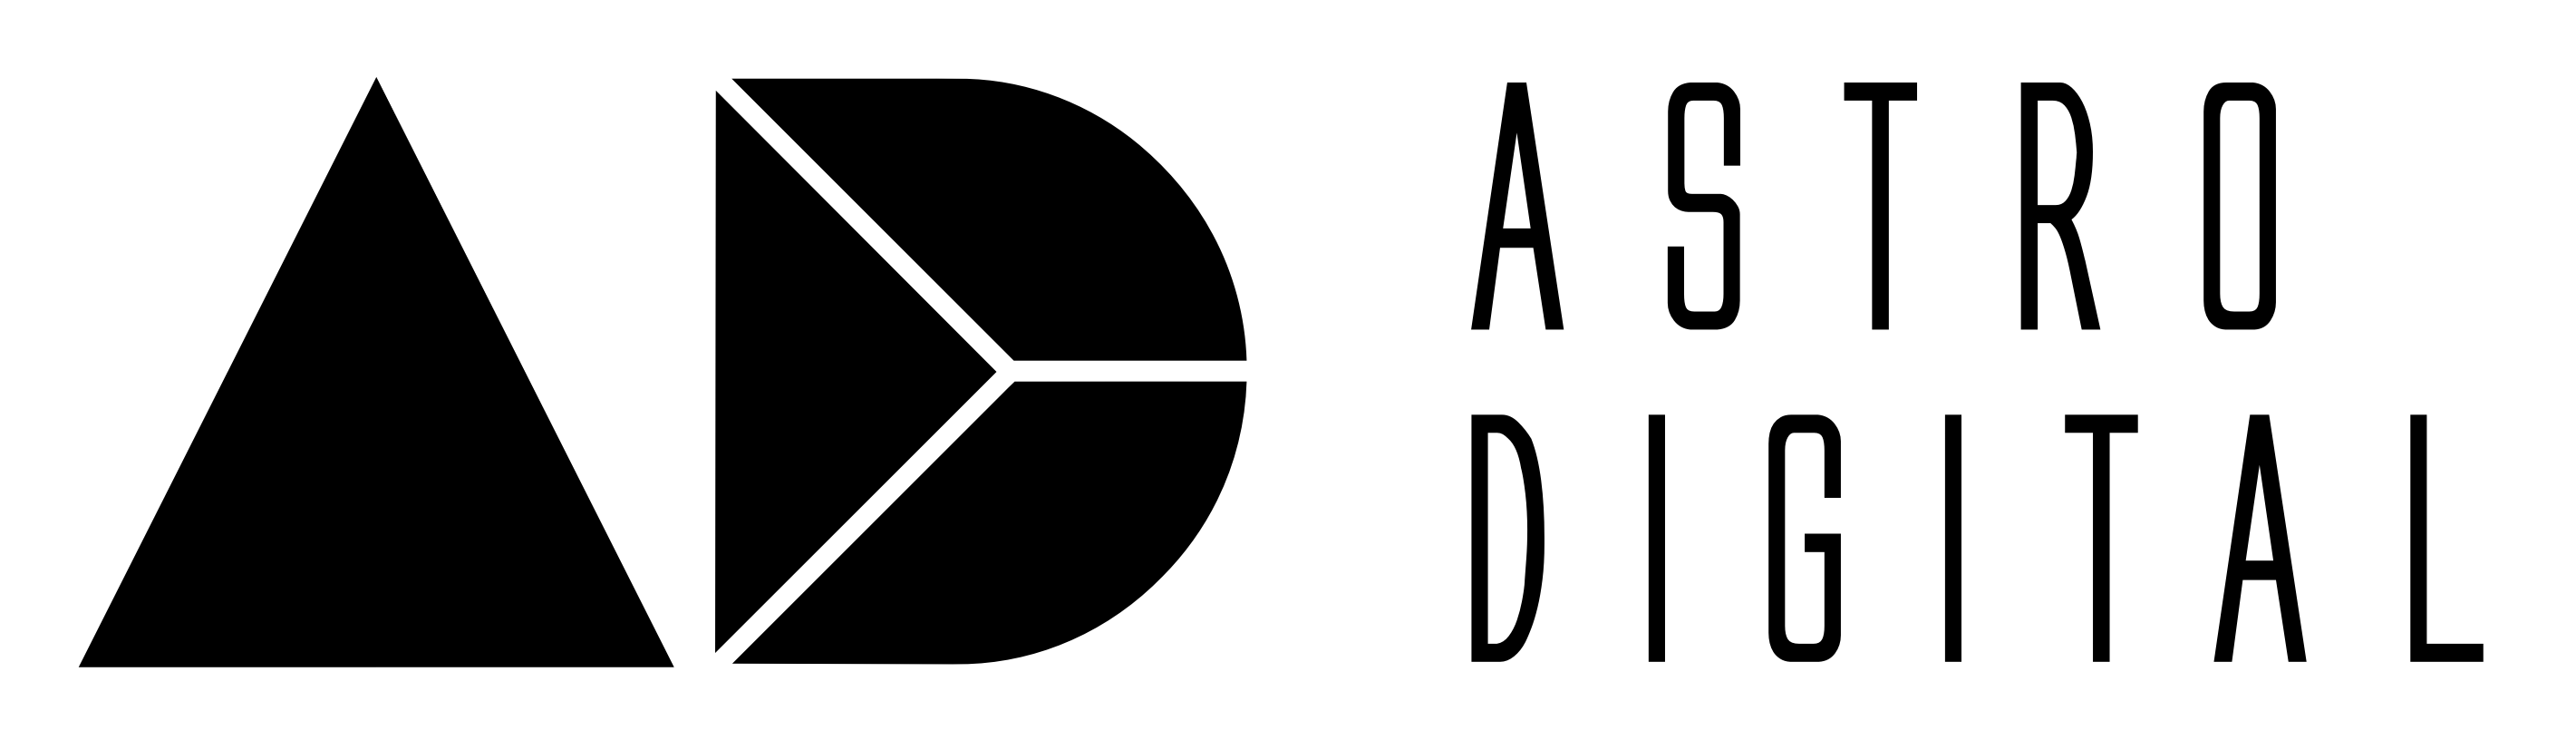 Astro Digital logo